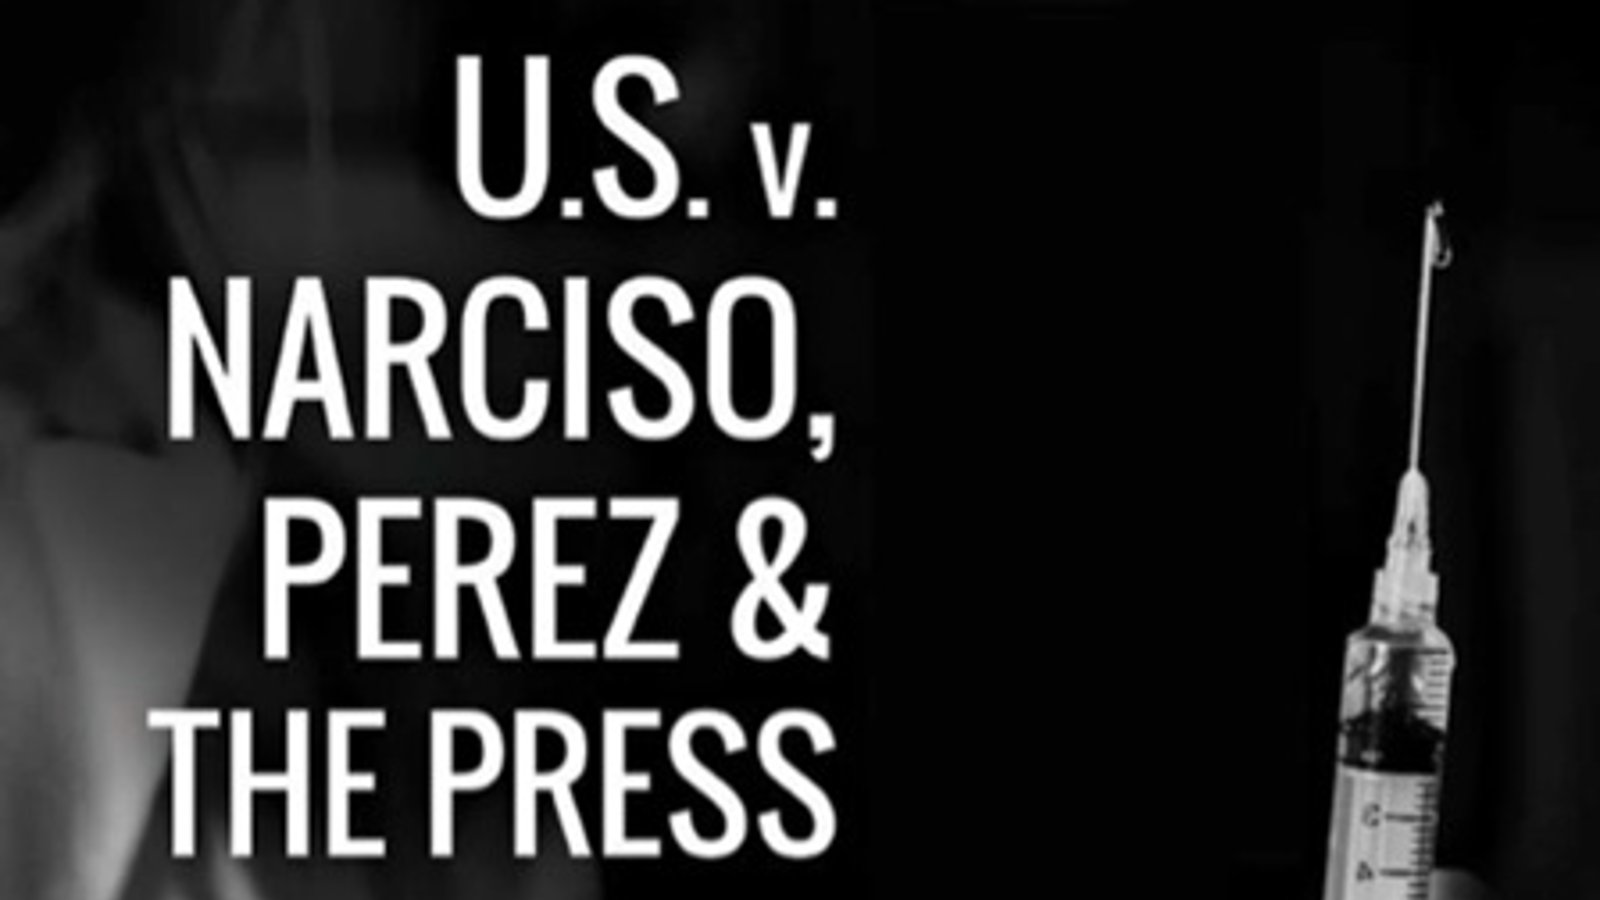 U.S v. Narciso, Perez & the Press